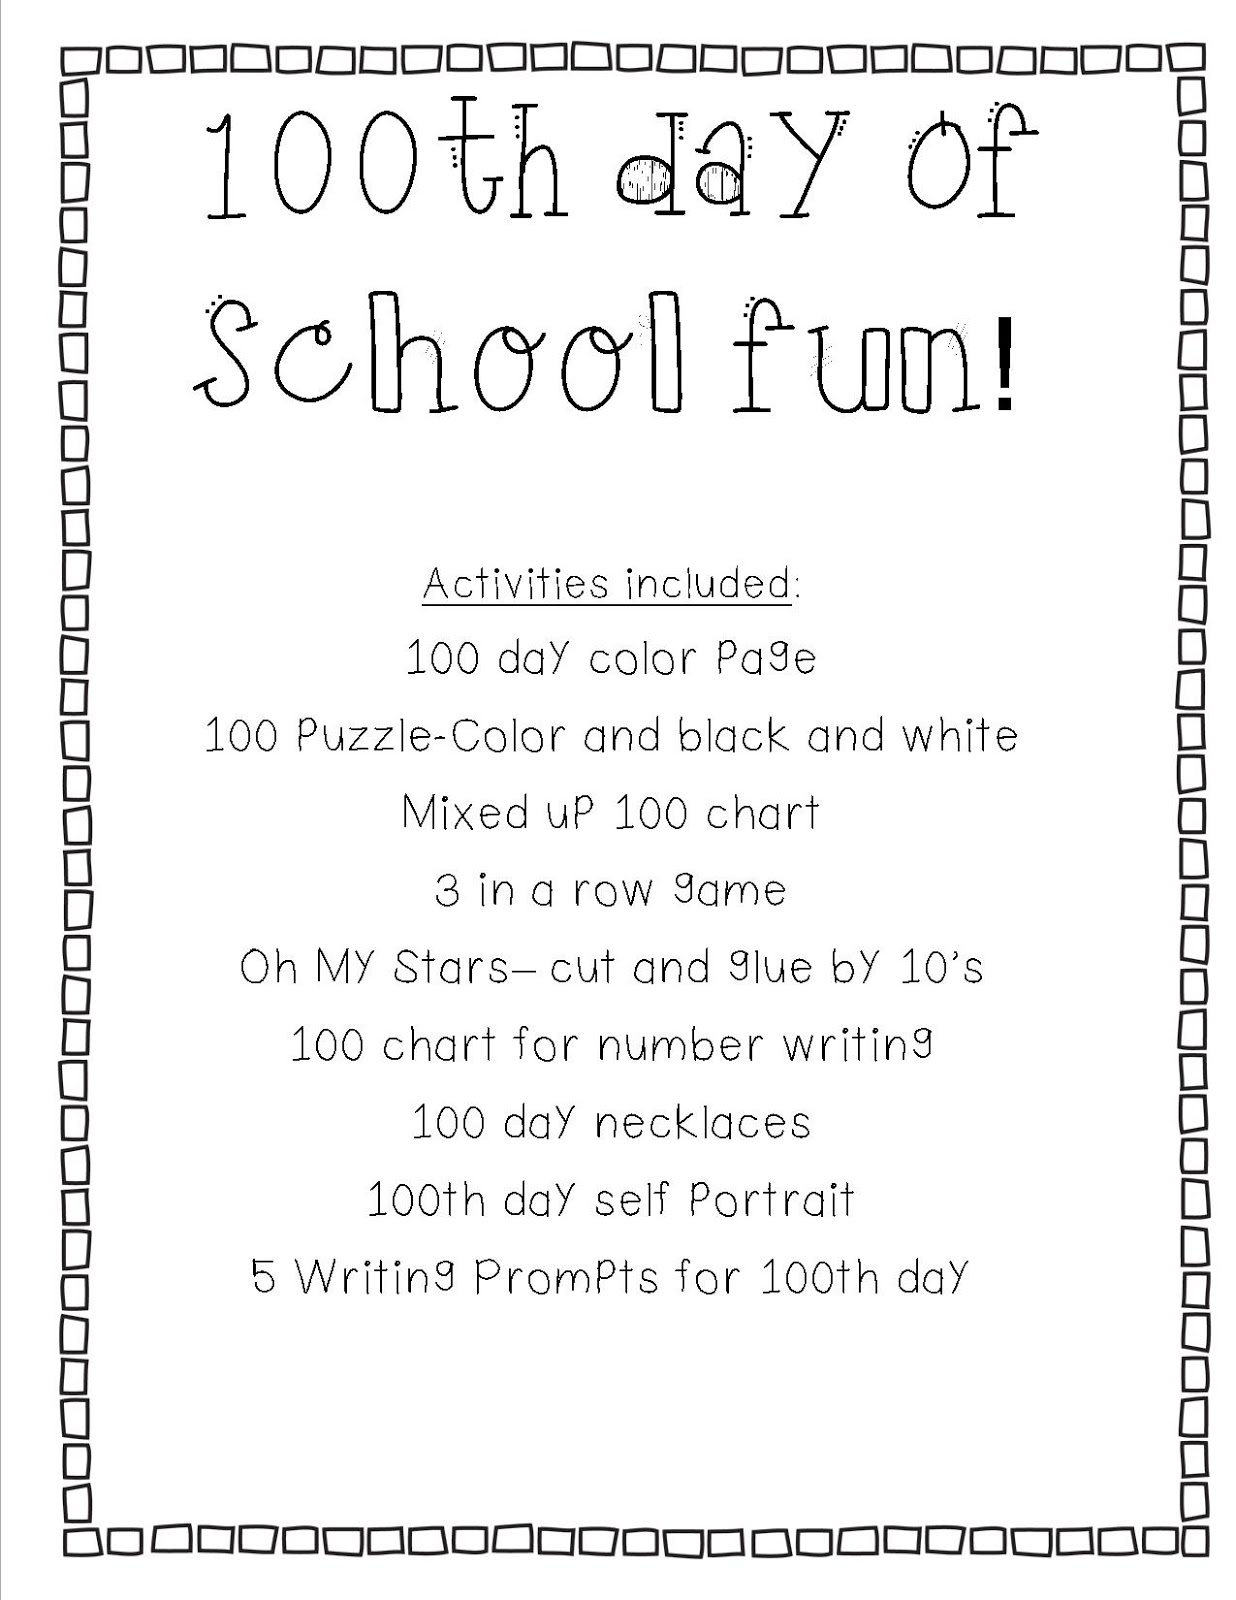 mrs-bohaty-s-kindergarten-kingdom-100th-day